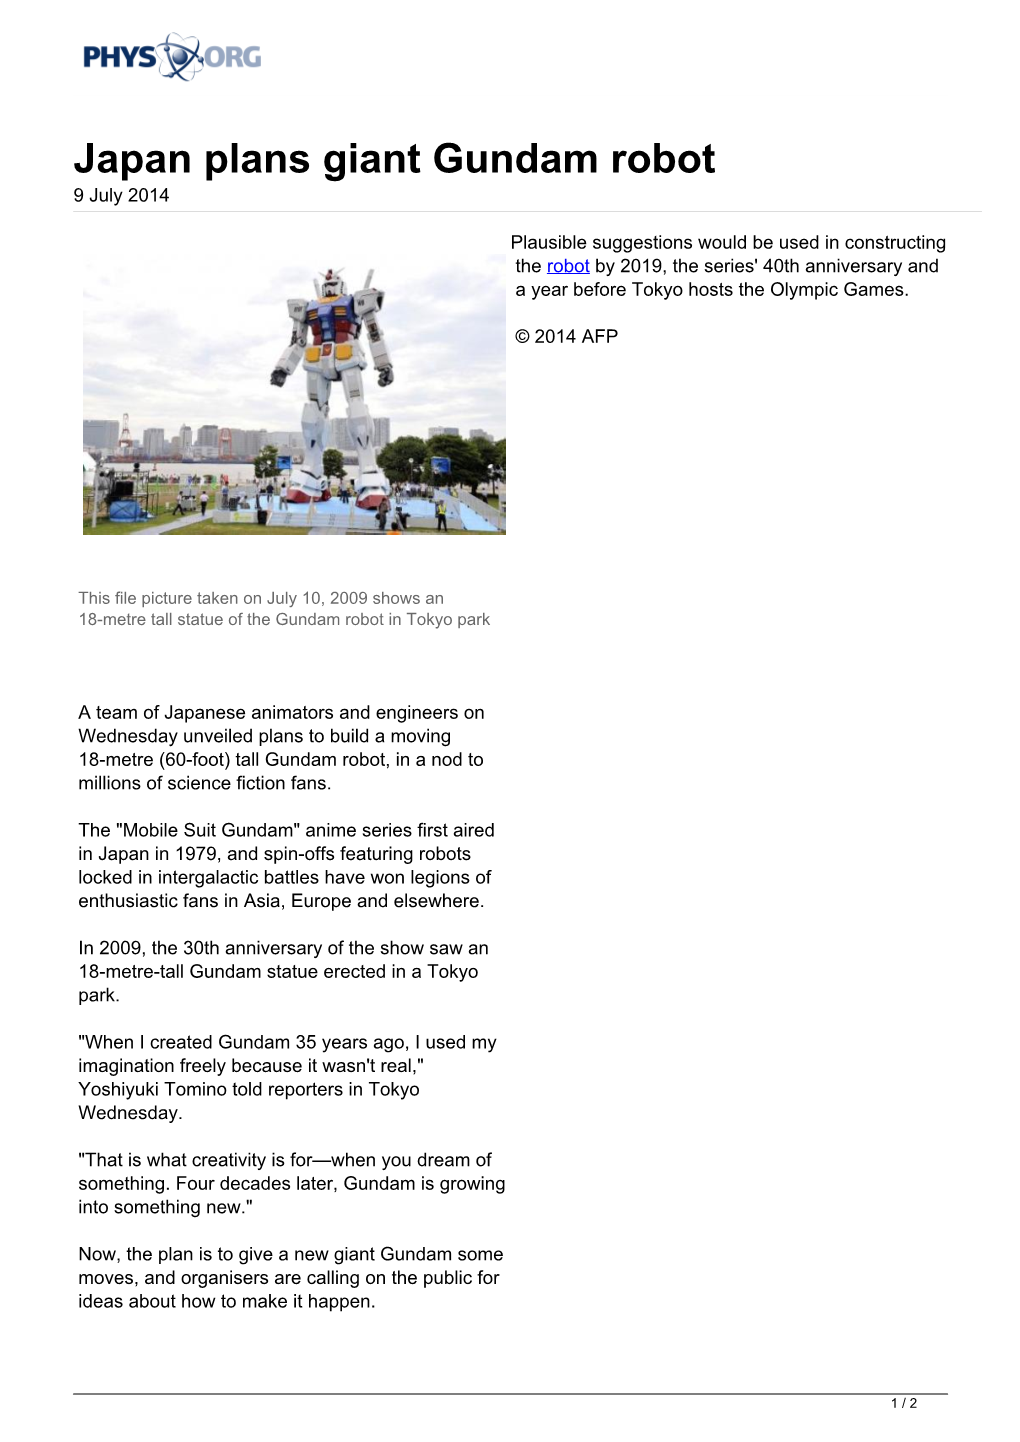 Japan Plans Giant Gundam Robot 9 July 2014